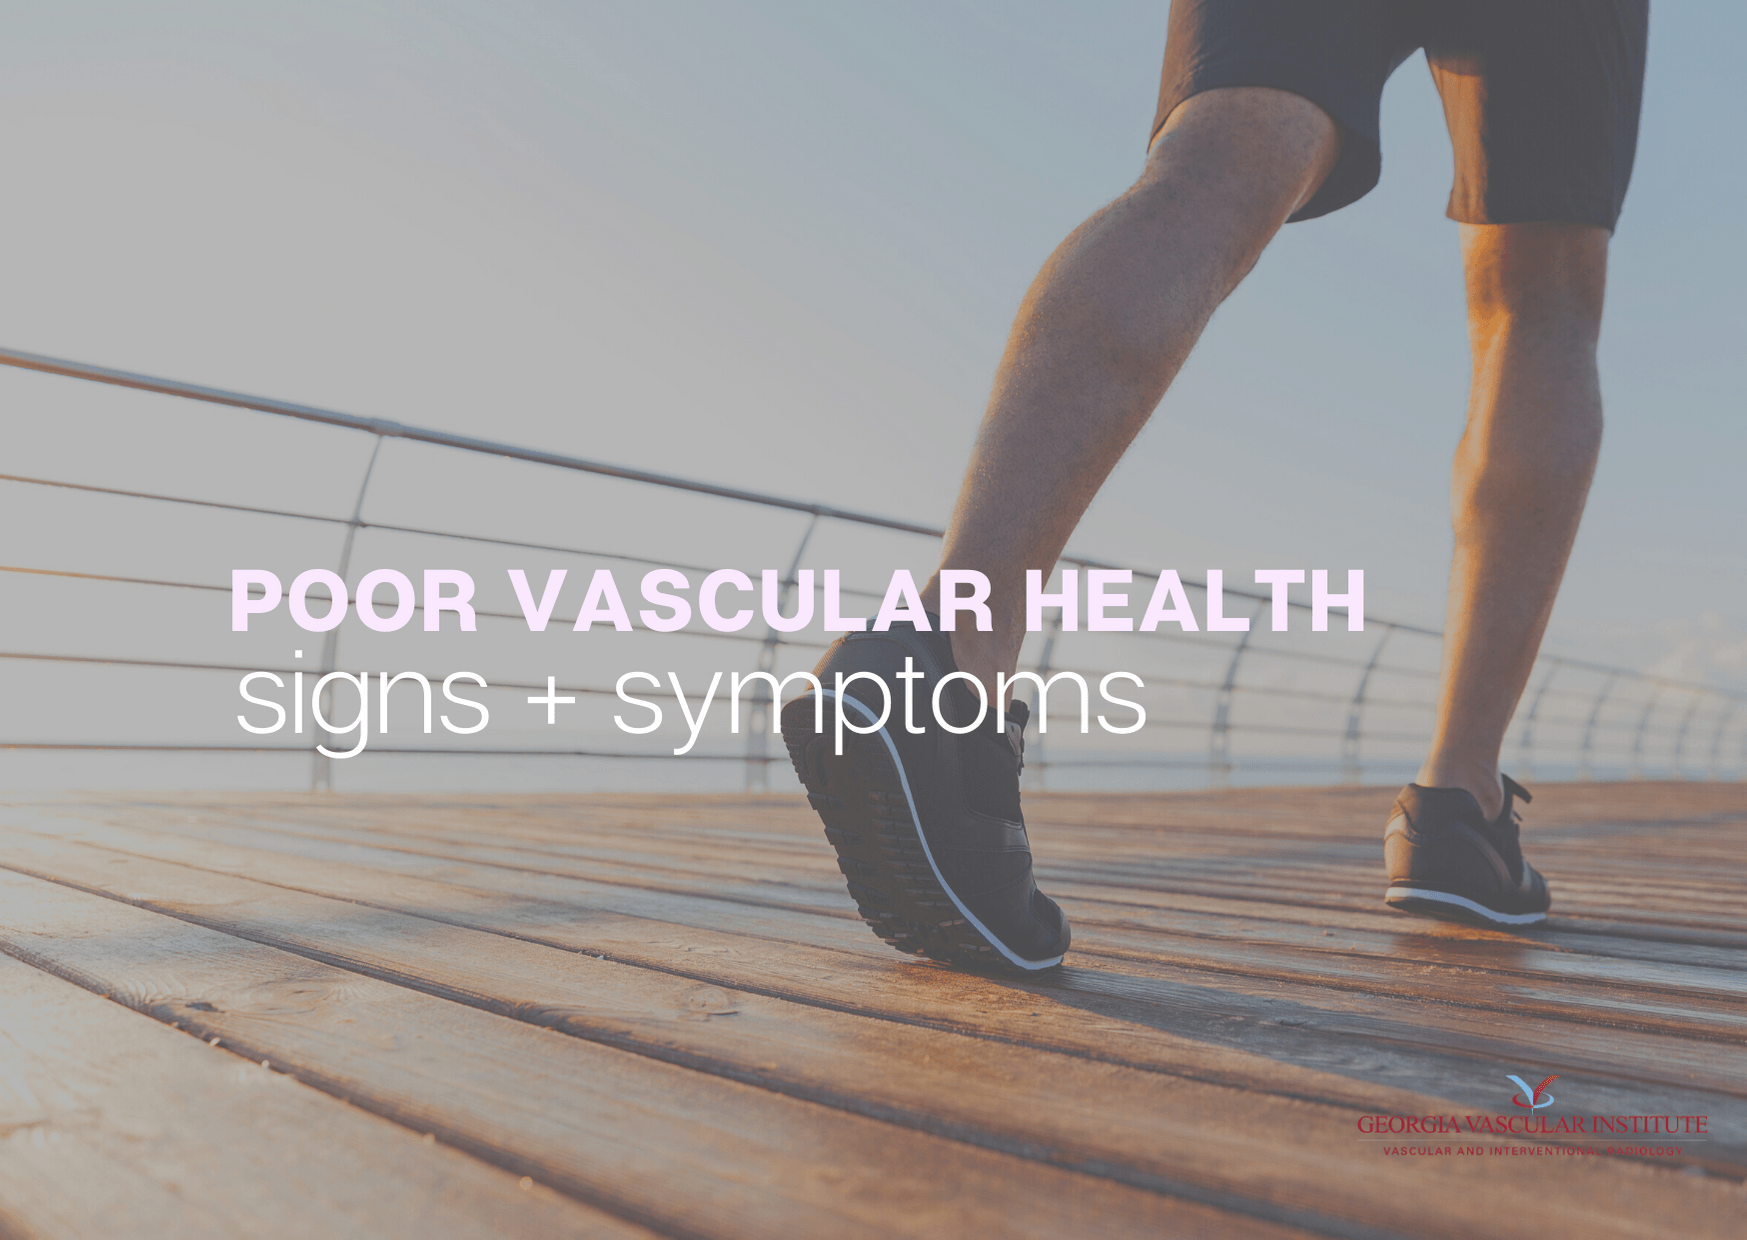 Signs of Poor Vascular Health